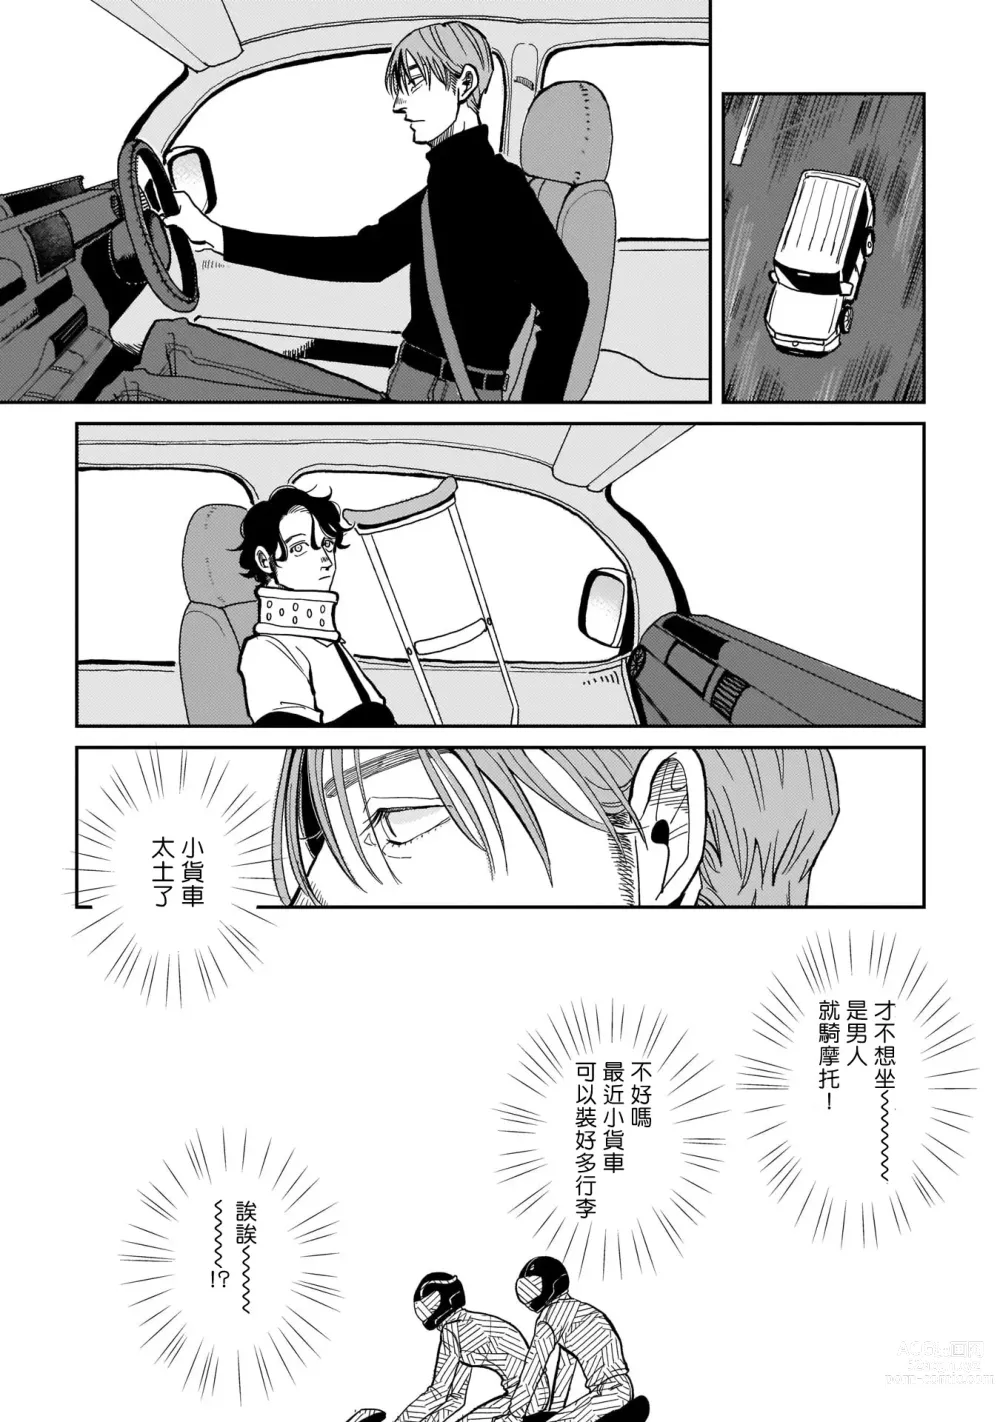 Page 15 of manga 无论疾病、还是健康 #4-6 + P站番外插图 + 番外合集1-7